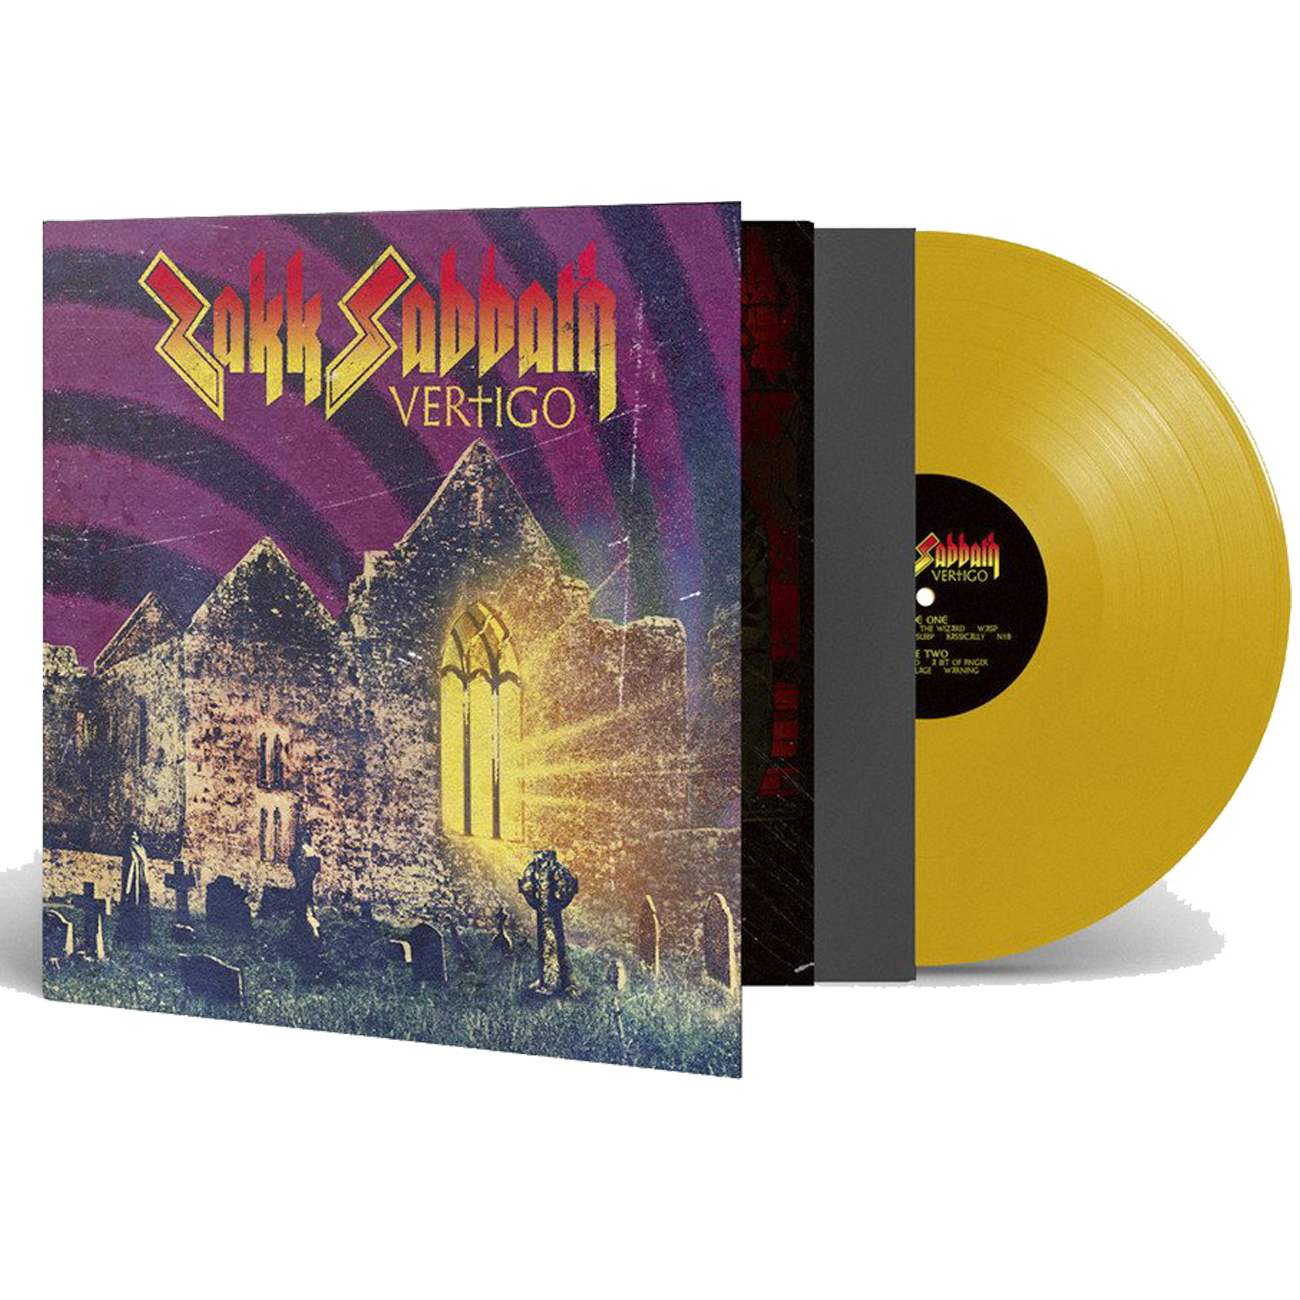 Zakk Sabbath - Vertigo (Yellow Vinyl) - LP